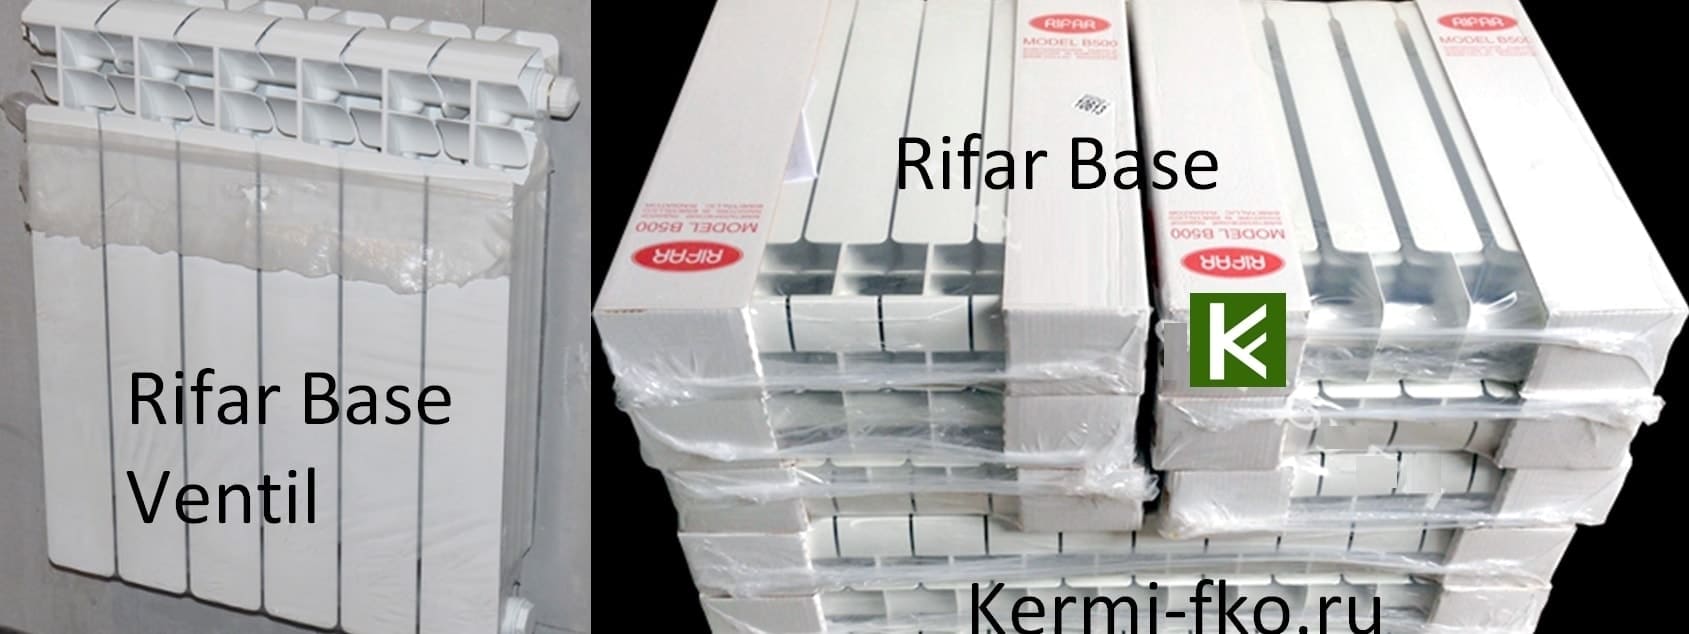 Биметаллические радиаторы Rifar Base, биметаллический радиатор рифар бейс